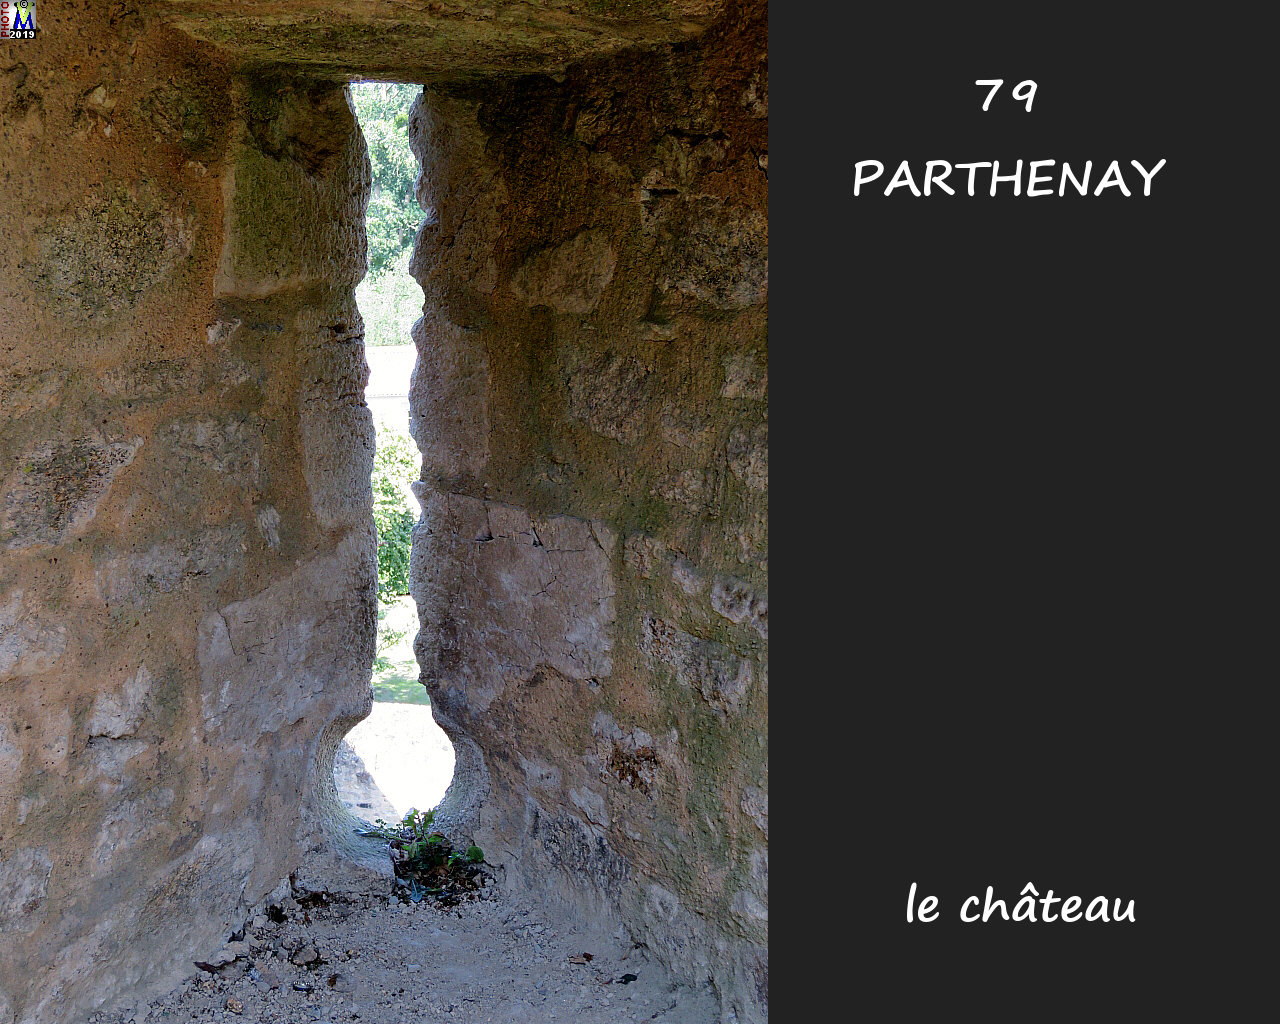 79PARTHENAY_chateau_1016.jpg